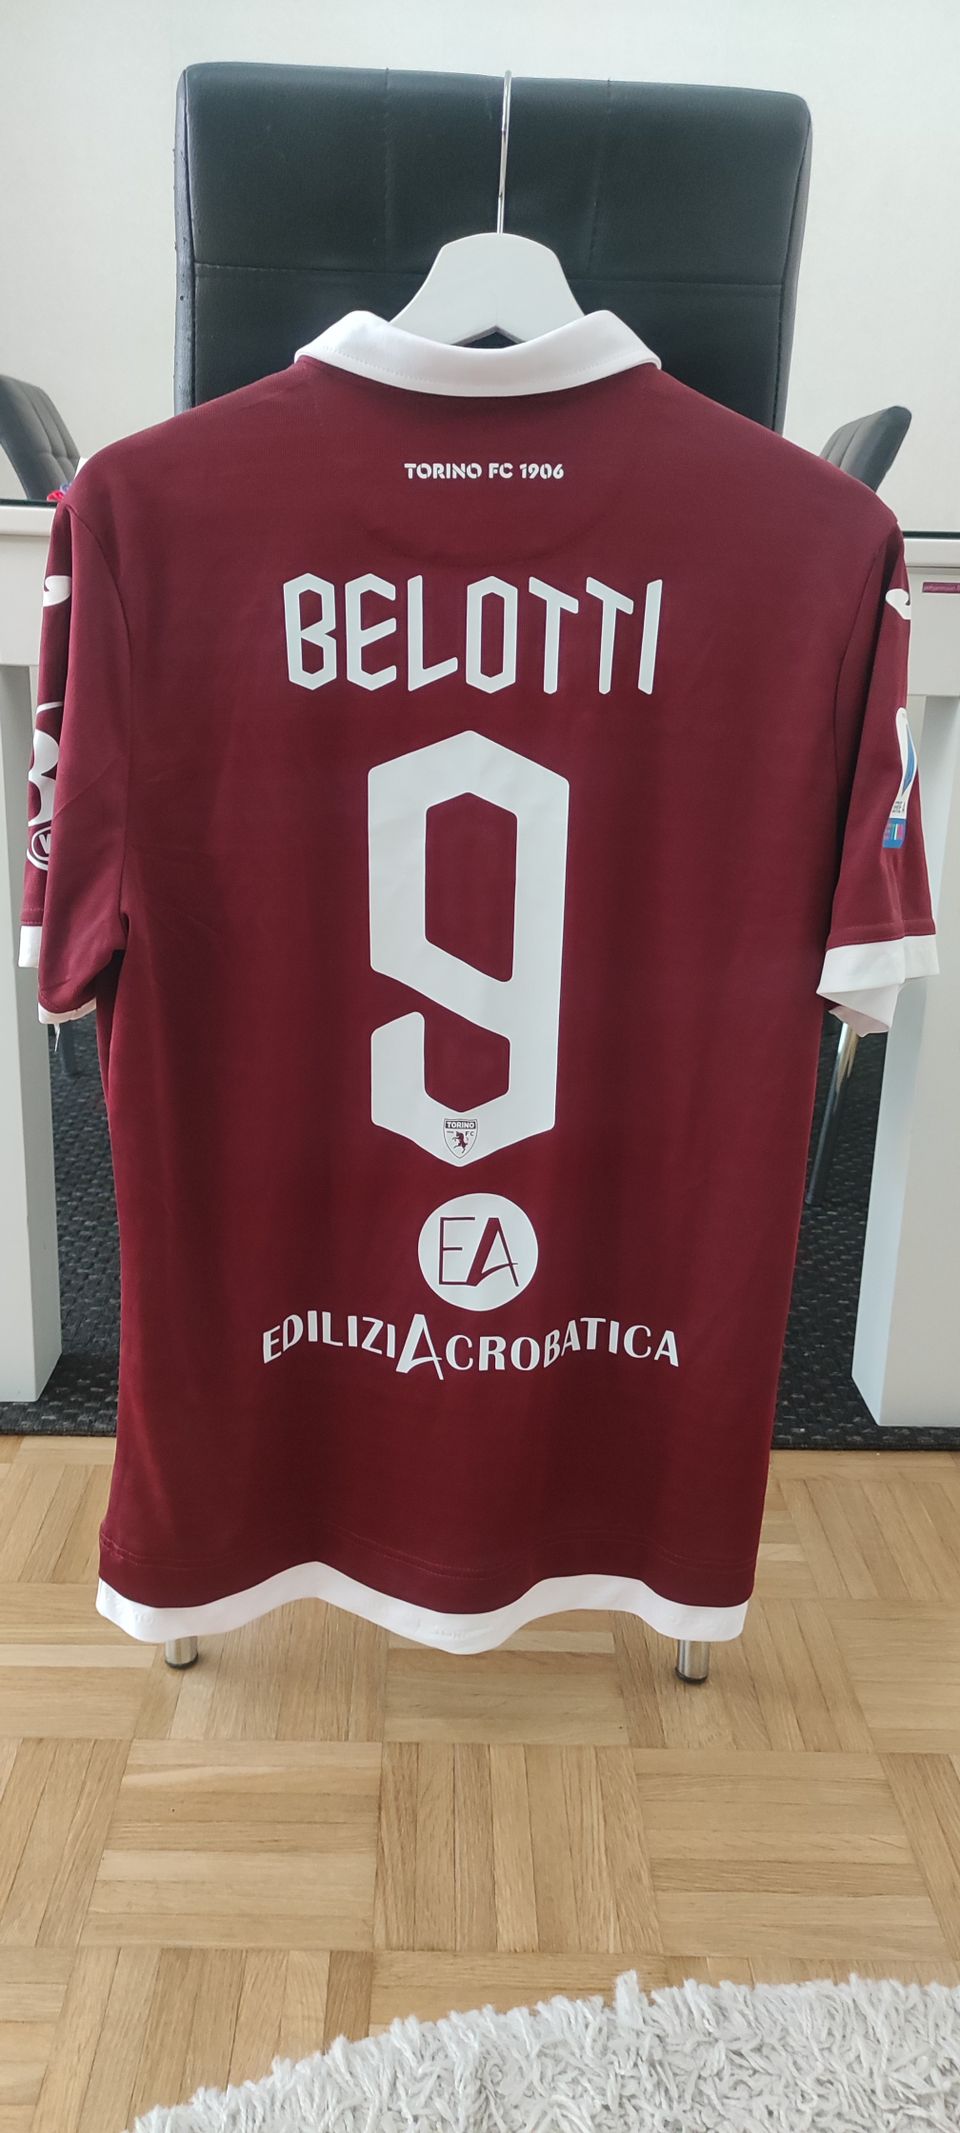 Belotti Match worn pelipaita